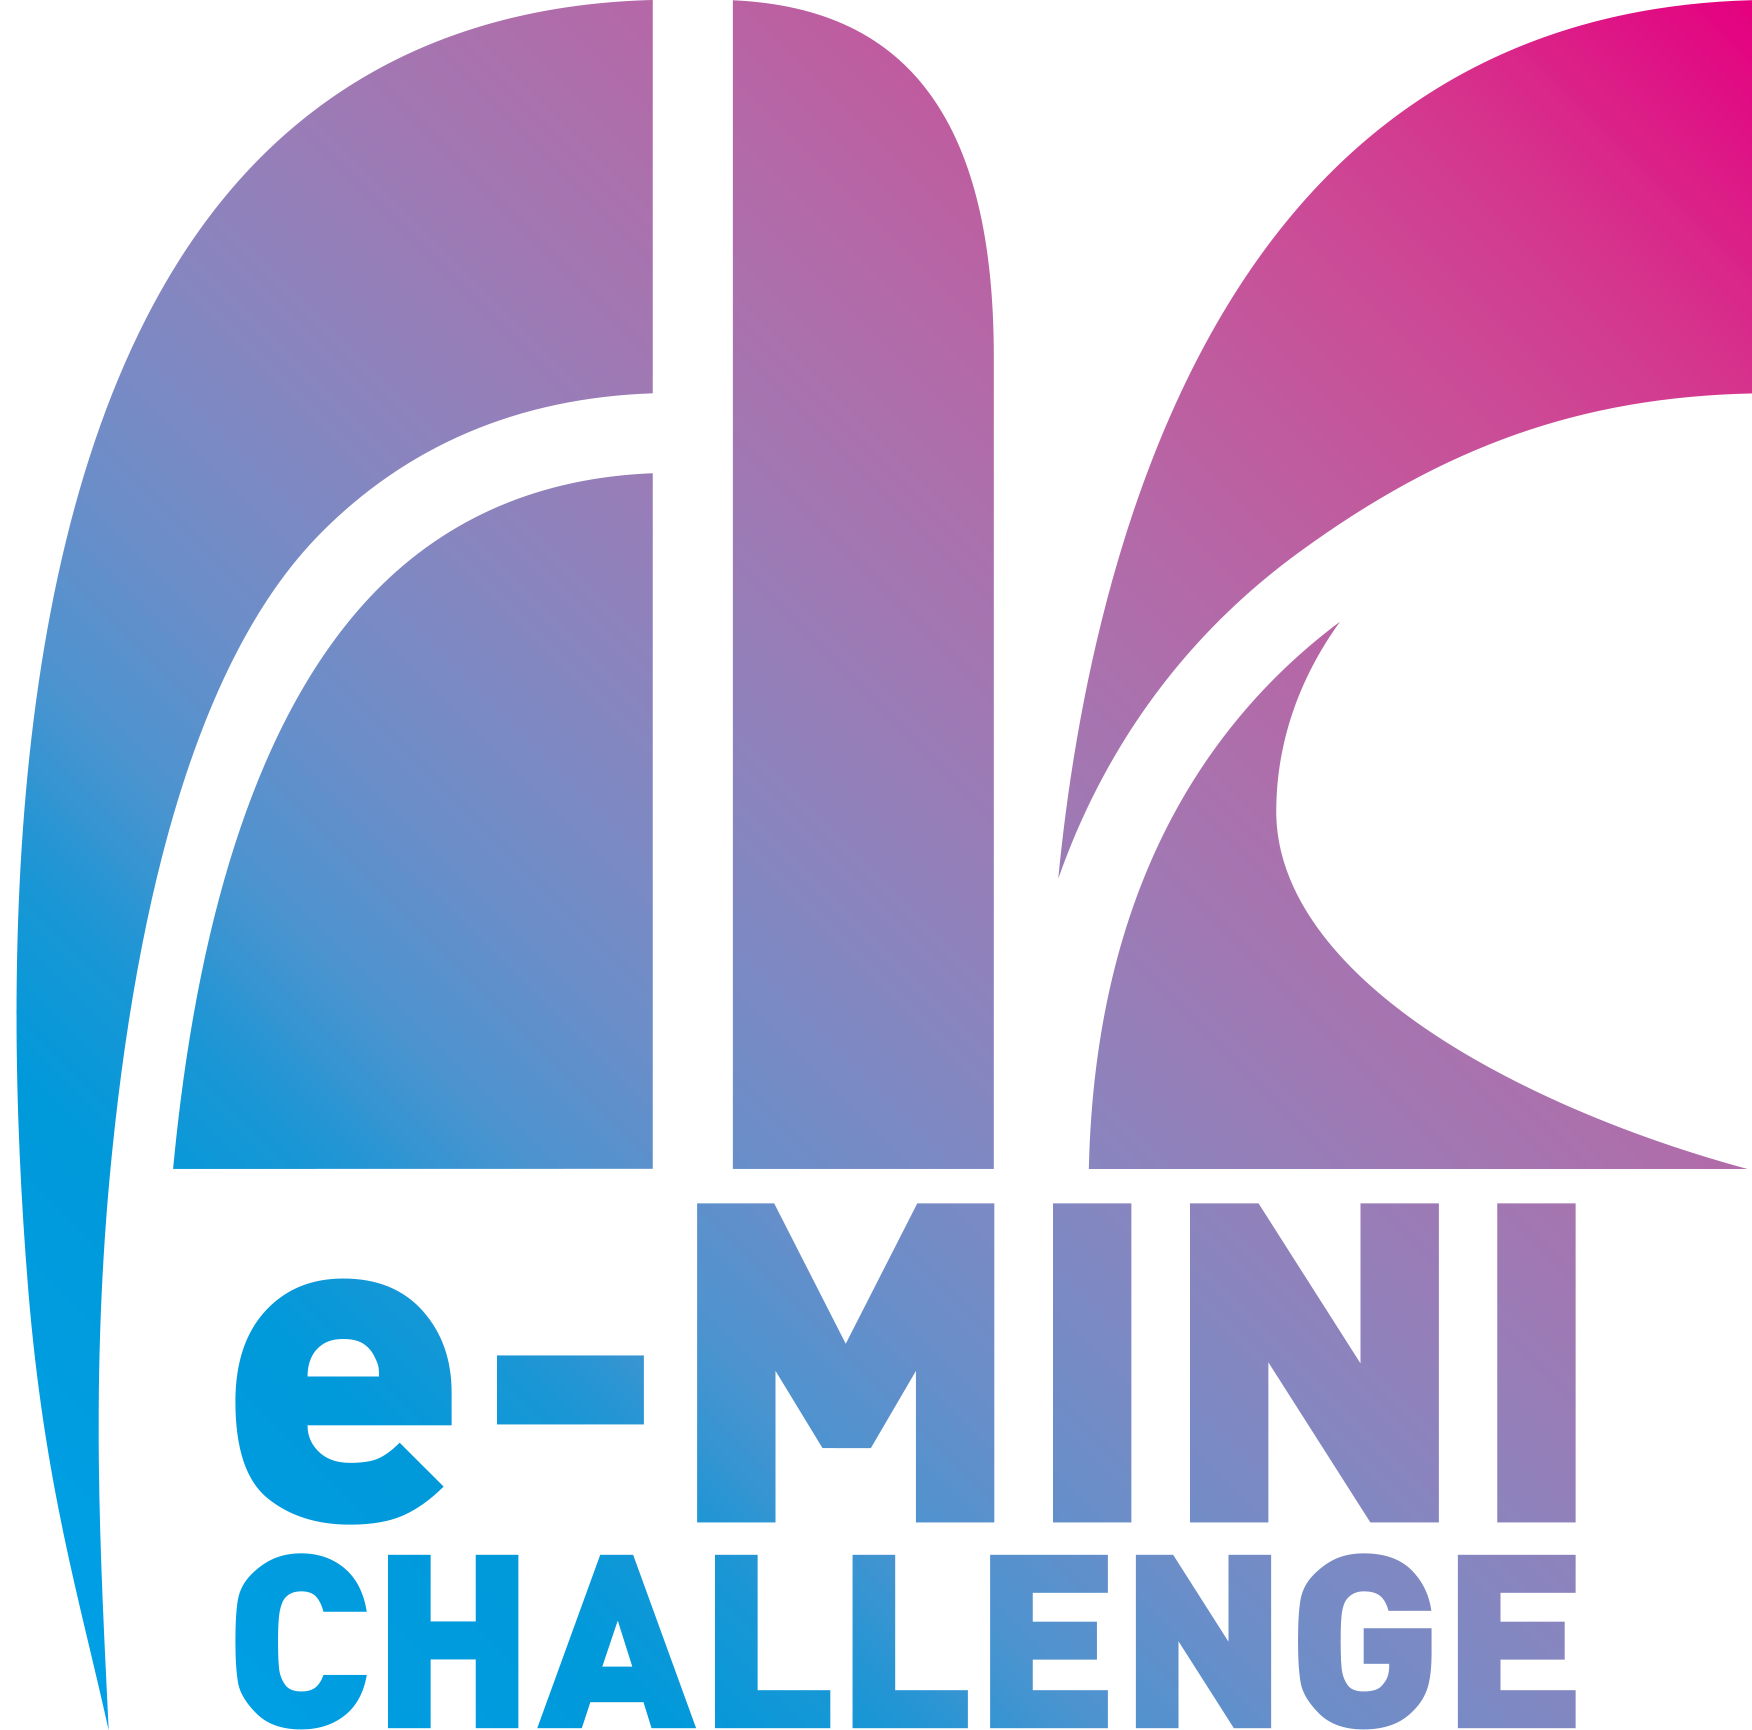 e-MINI CHALLENGE® 2020 Series -2nd Season-